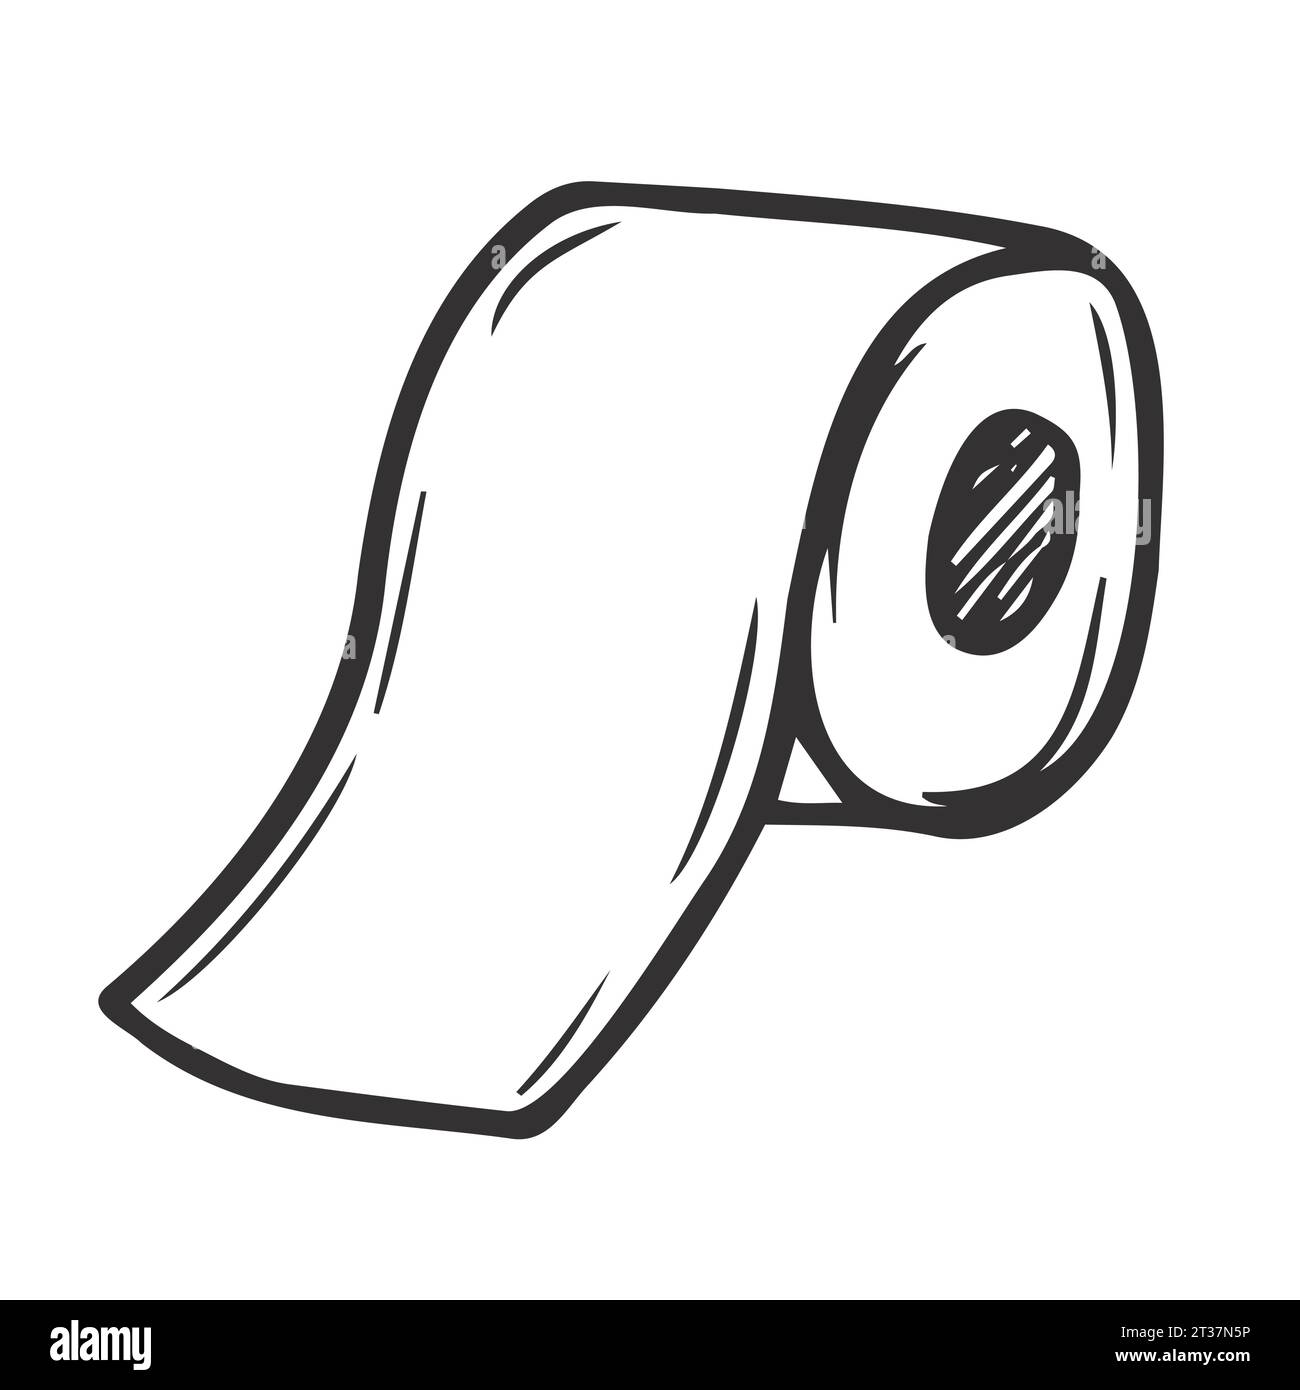 Eine Rolle Toilettenpapier im Doodle-Stil. Handgezeichnetes Toilettenpapier. Vektor-Illustration isoliert Stock Vektor